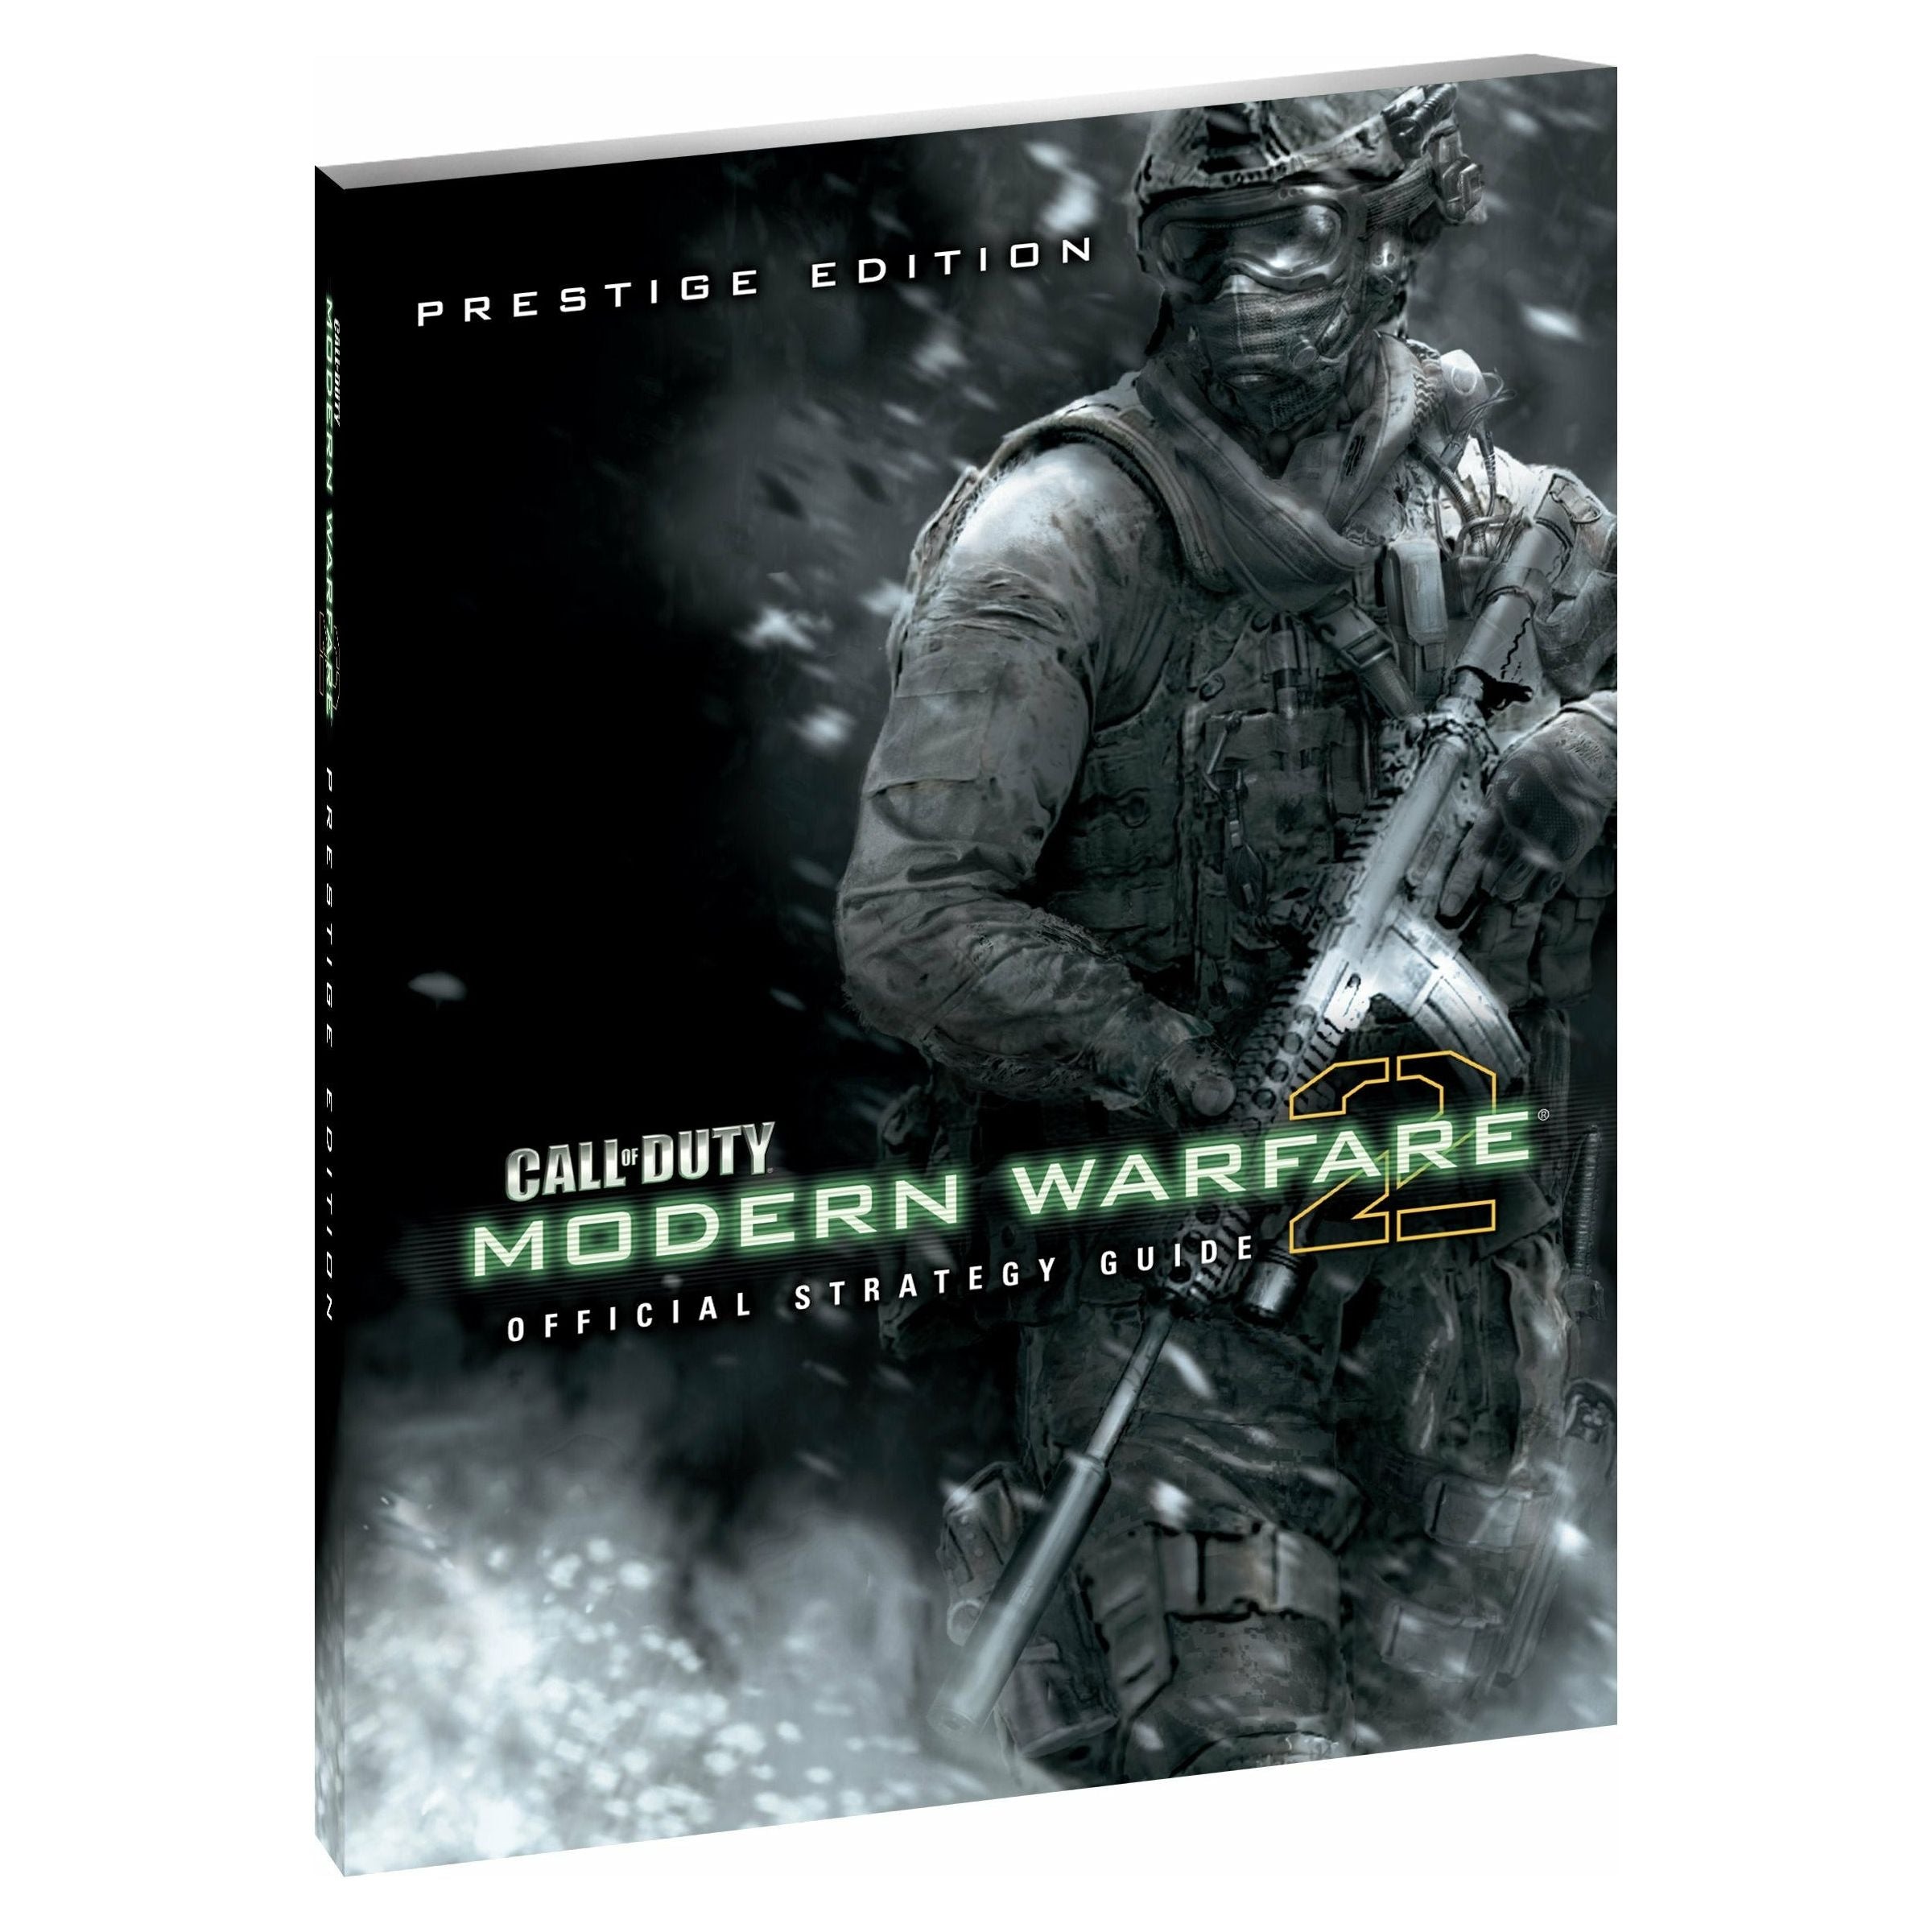 STRAT - Call of Duty Modern Warfare 2 Official Strategy Guide (Prestige Edition)